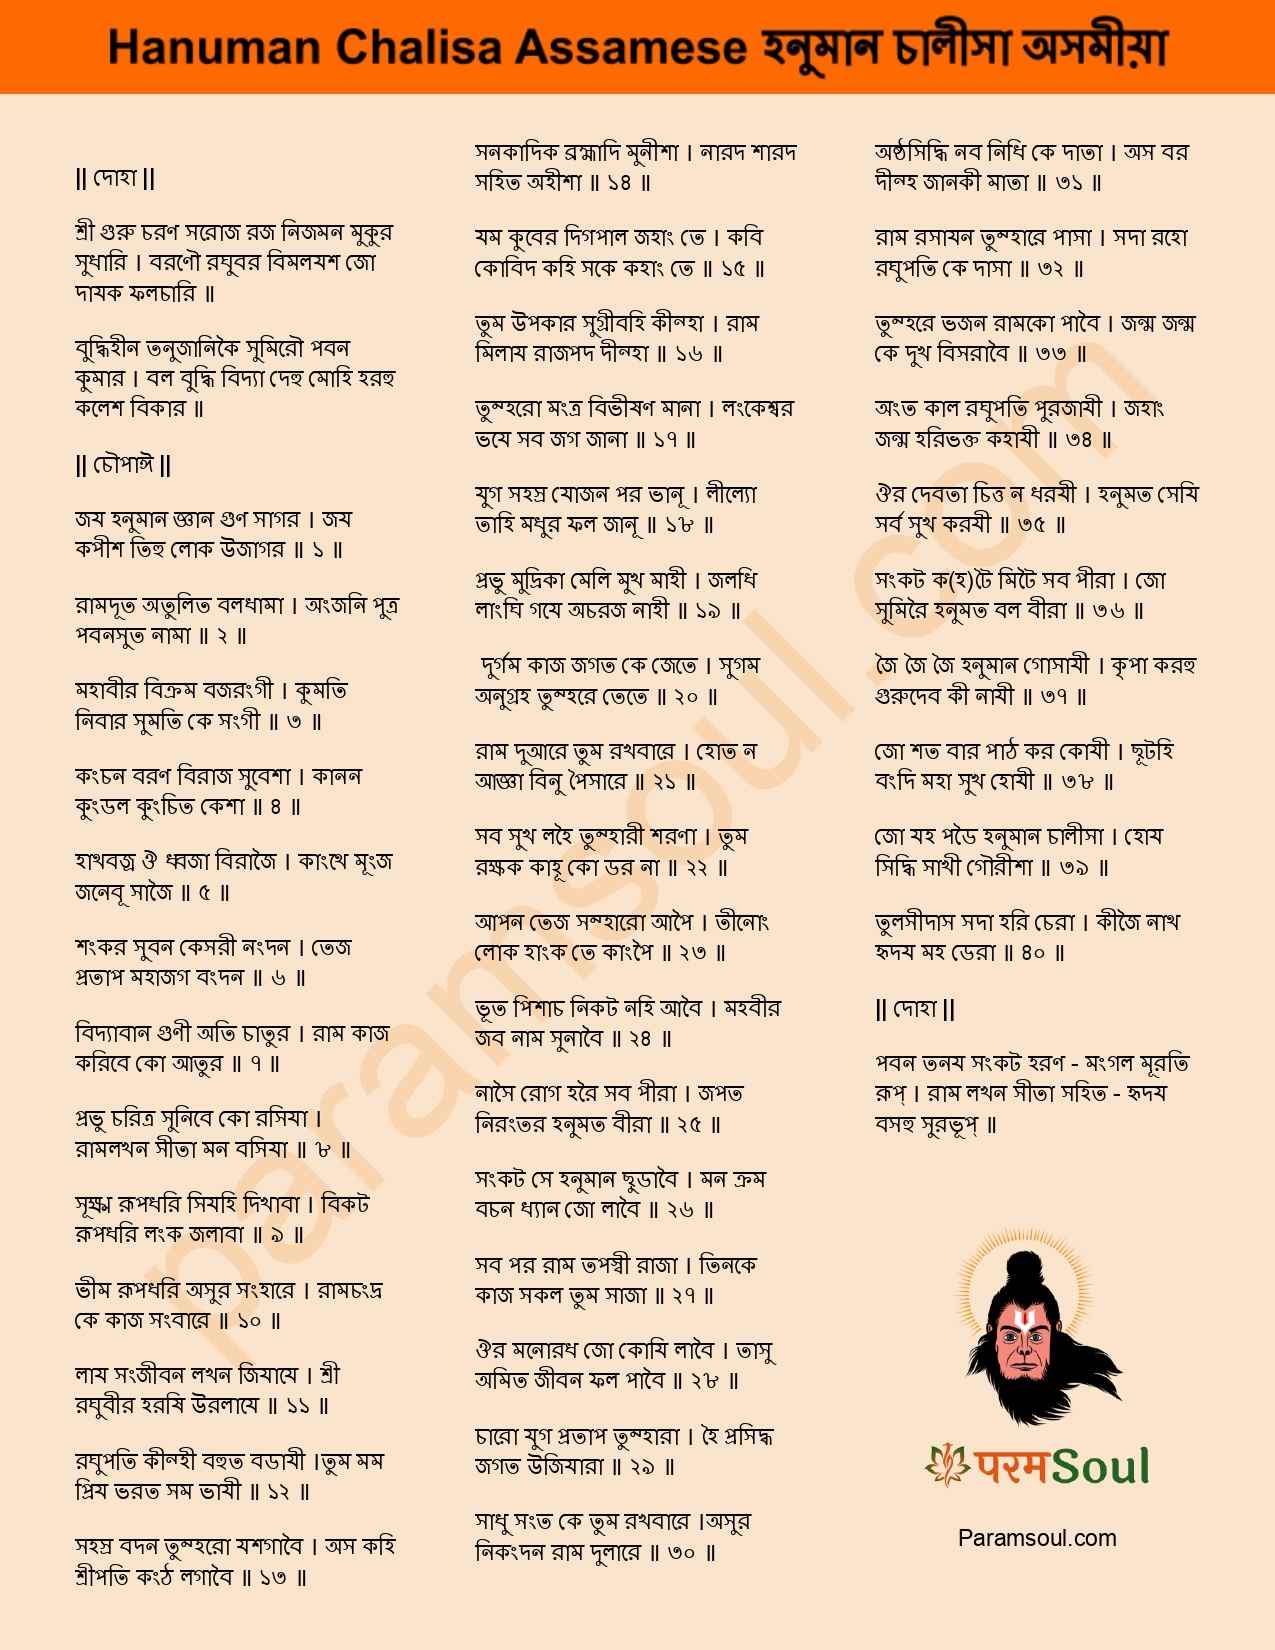 Hanuman chalisa lyrics in assamese